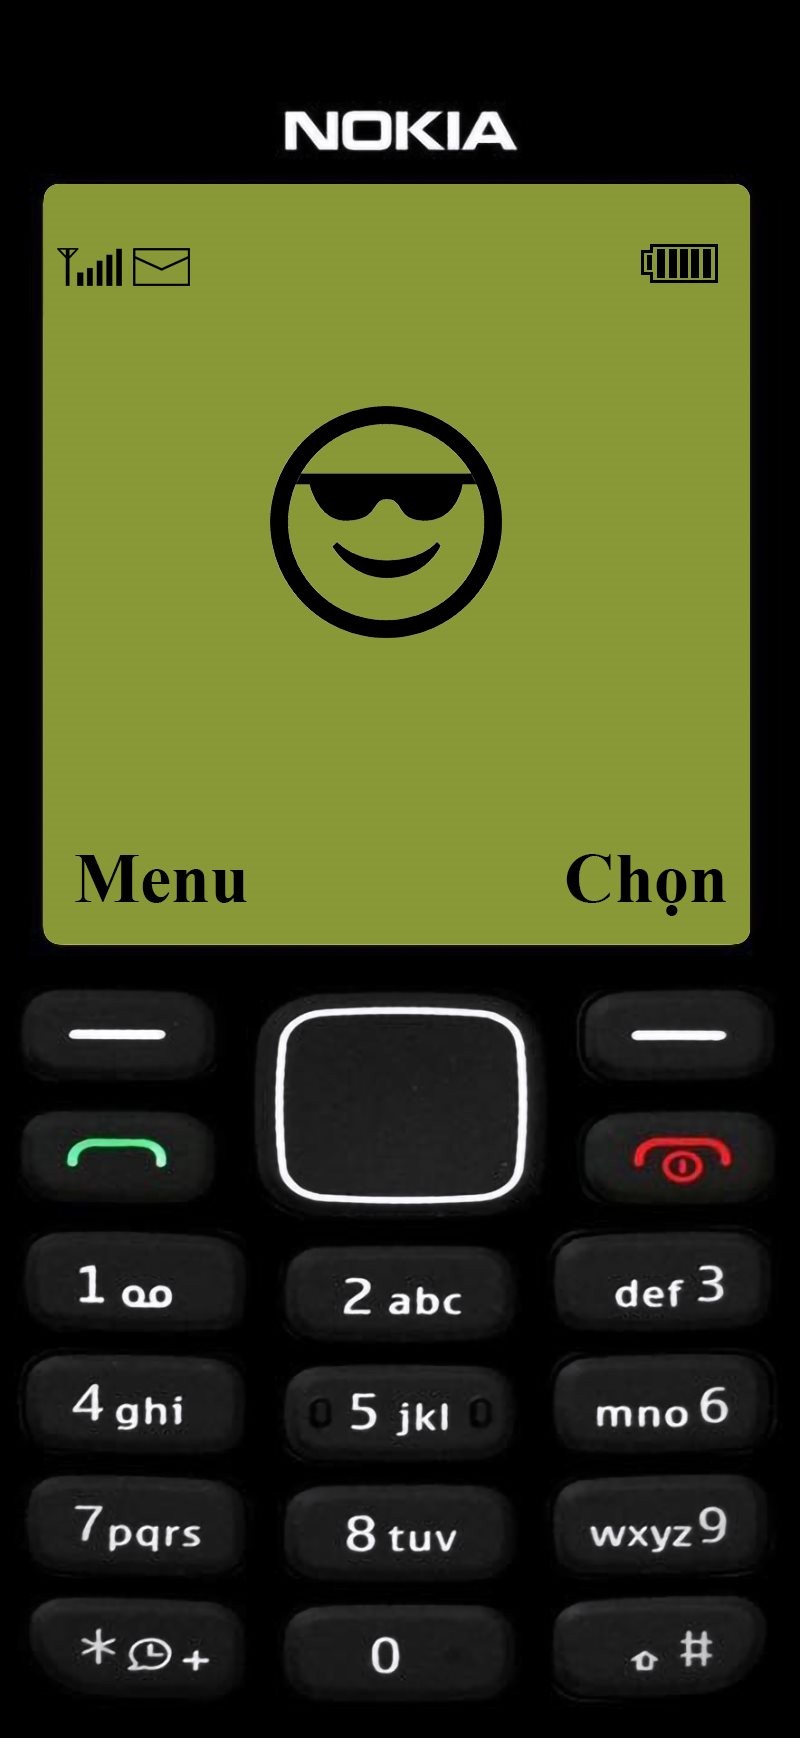 Tong hop hinh nen “cai trang” smartphone thanh Nokia 1280-Hinh-6